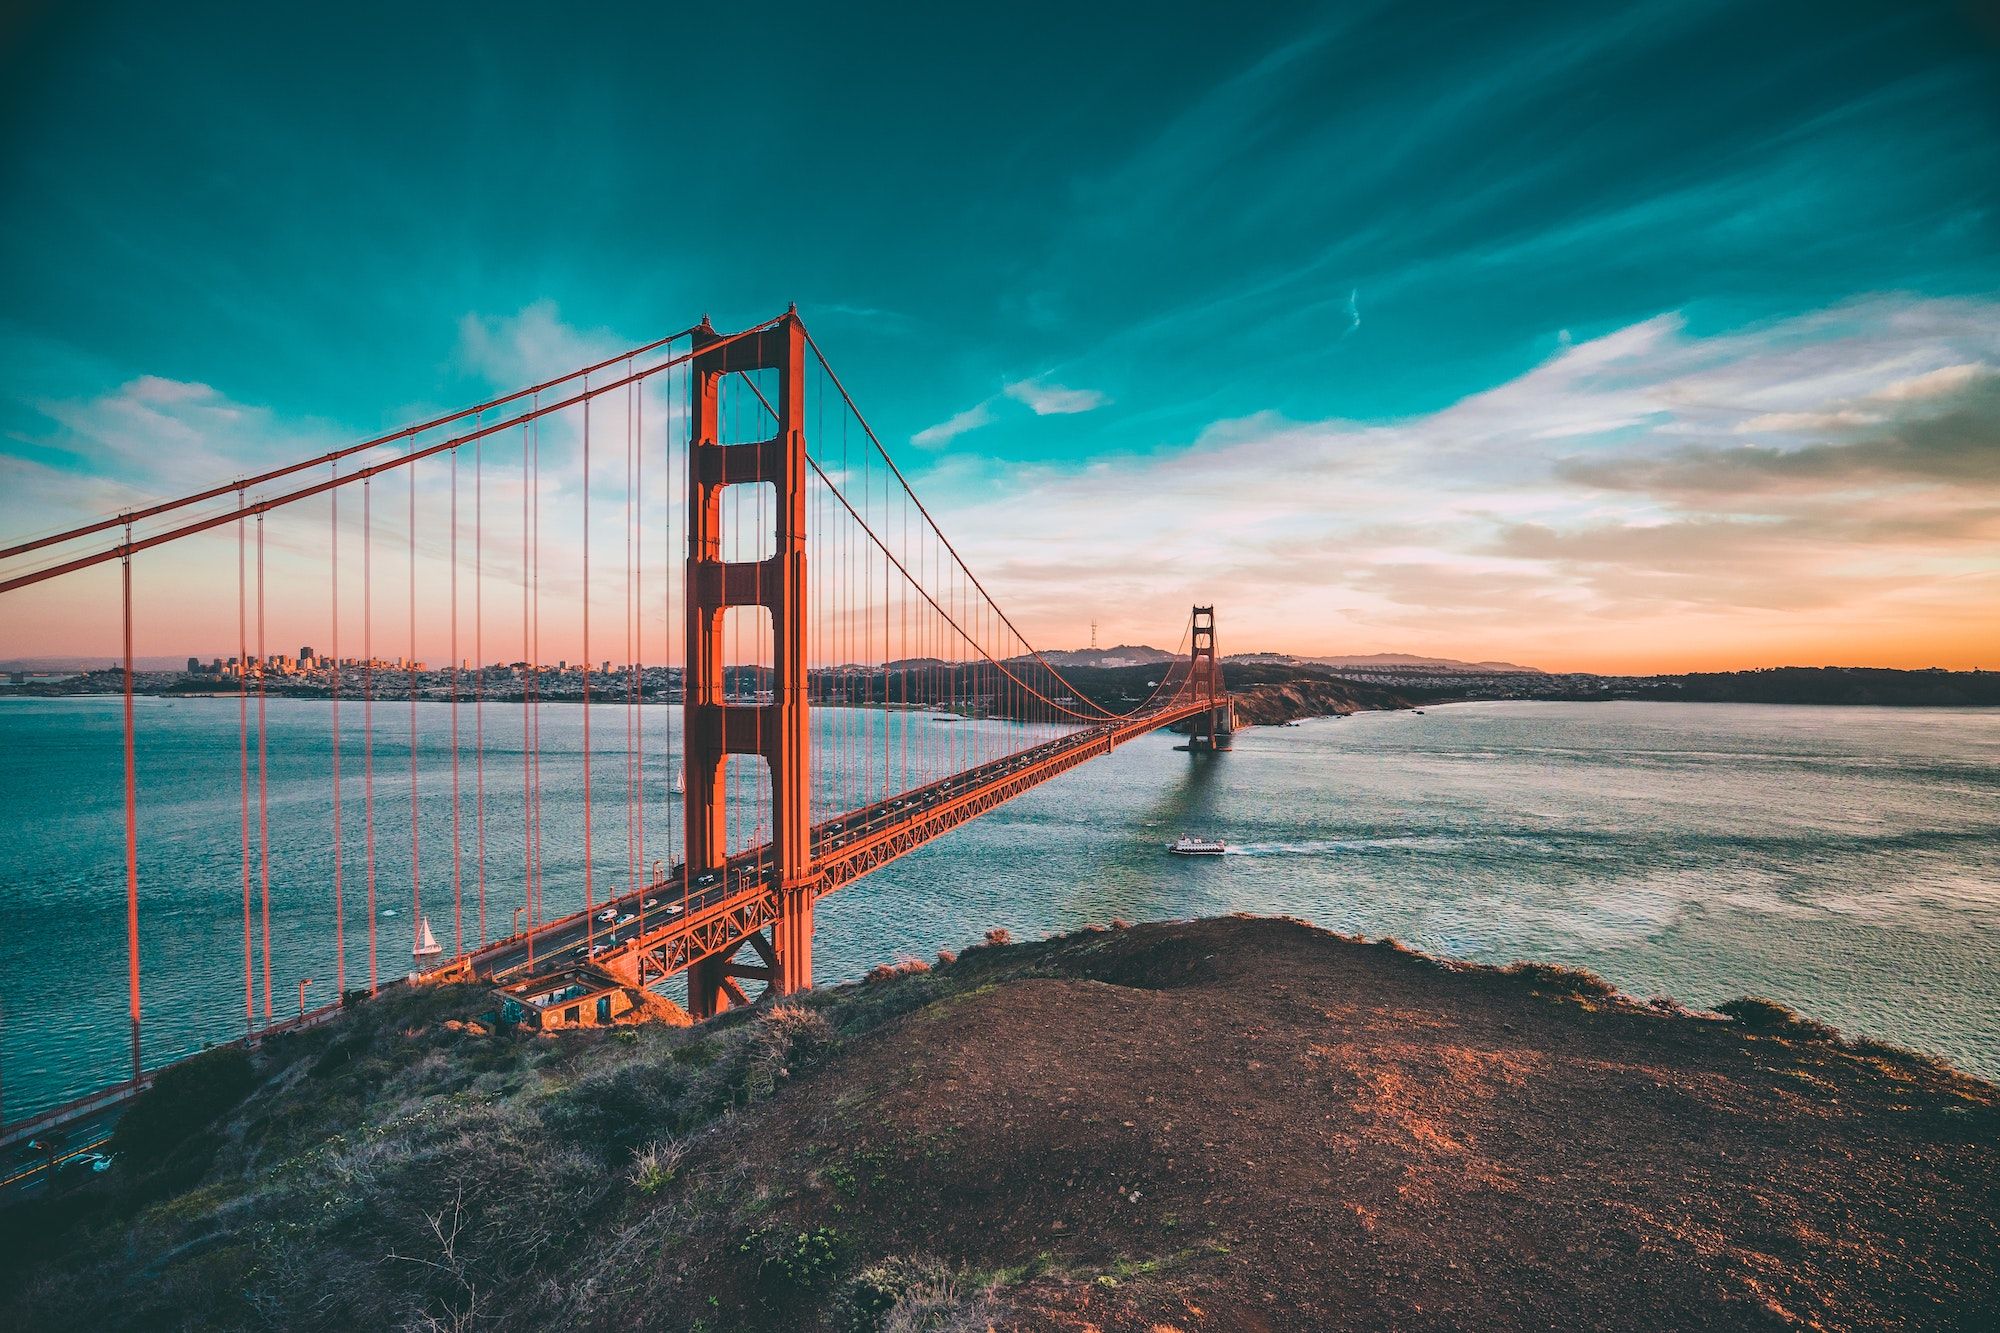 Background image of Golden Gate Bridge during daytime